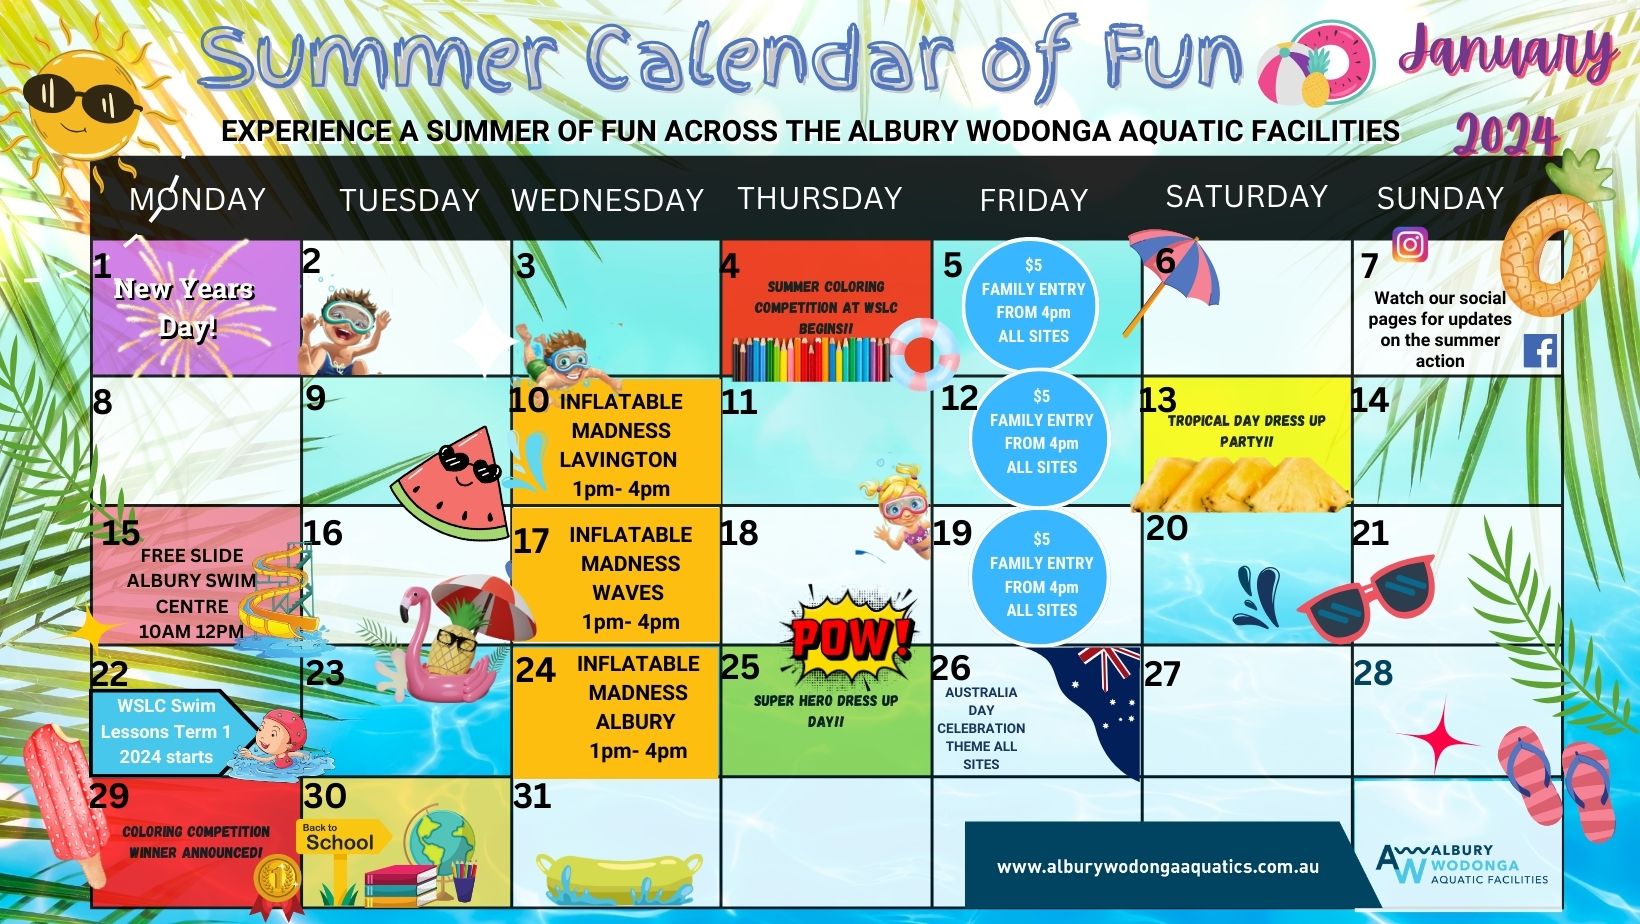 Summer Calendar of Fun is Back This January! Albury Wodonga Aquatic